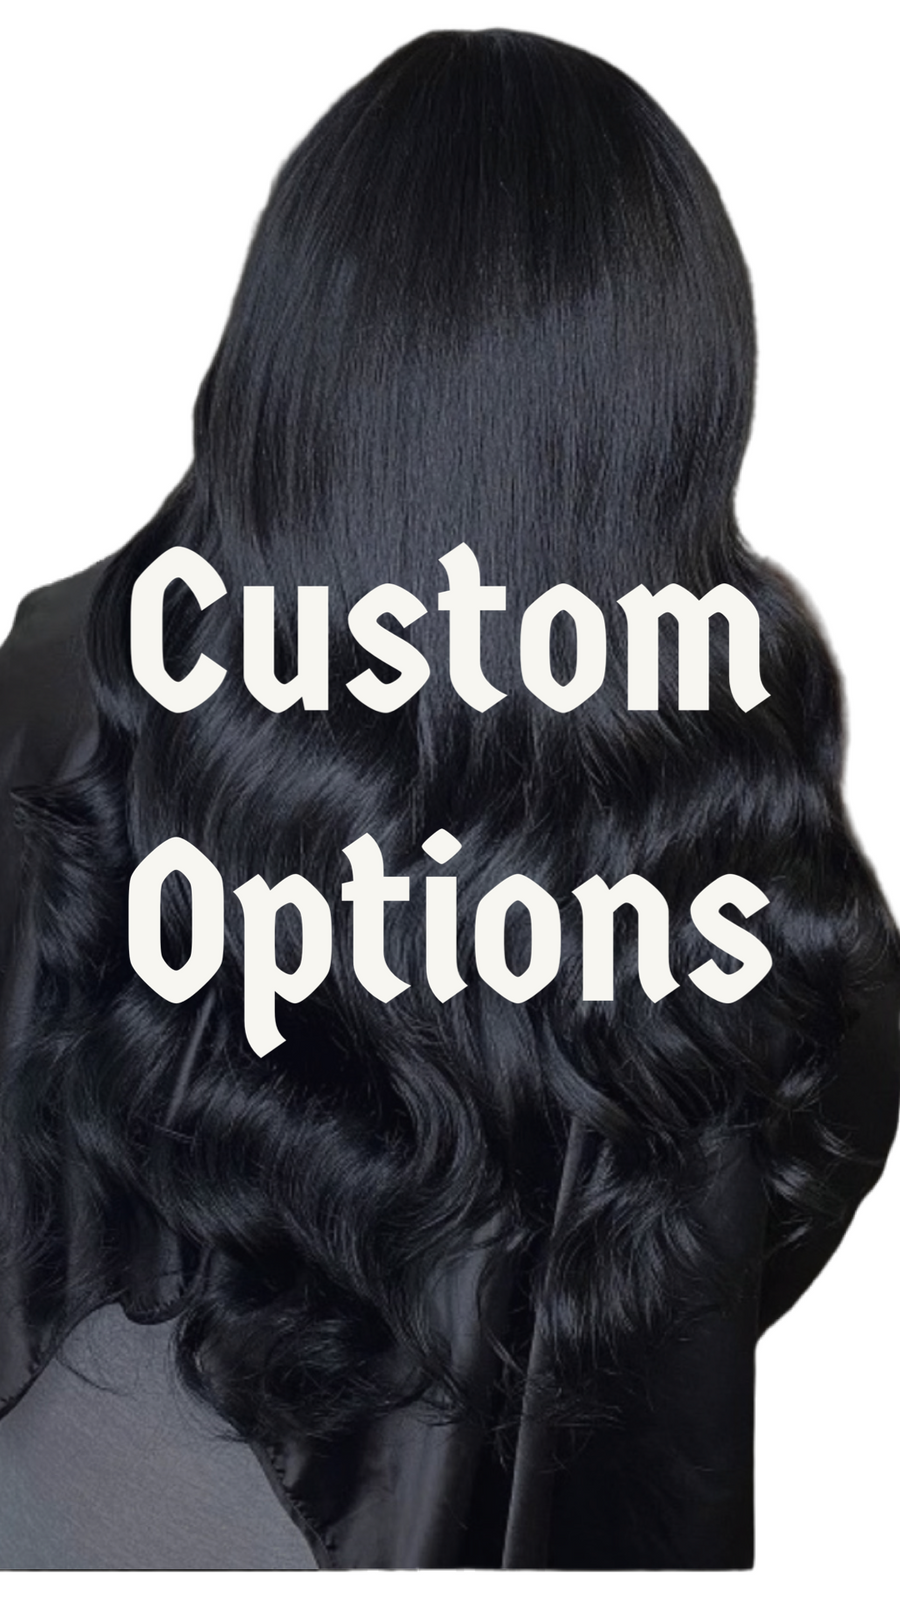 Custom options (I-Tips/Microlinks, Add Custom Color Options, Hand-Tied Weft Options)